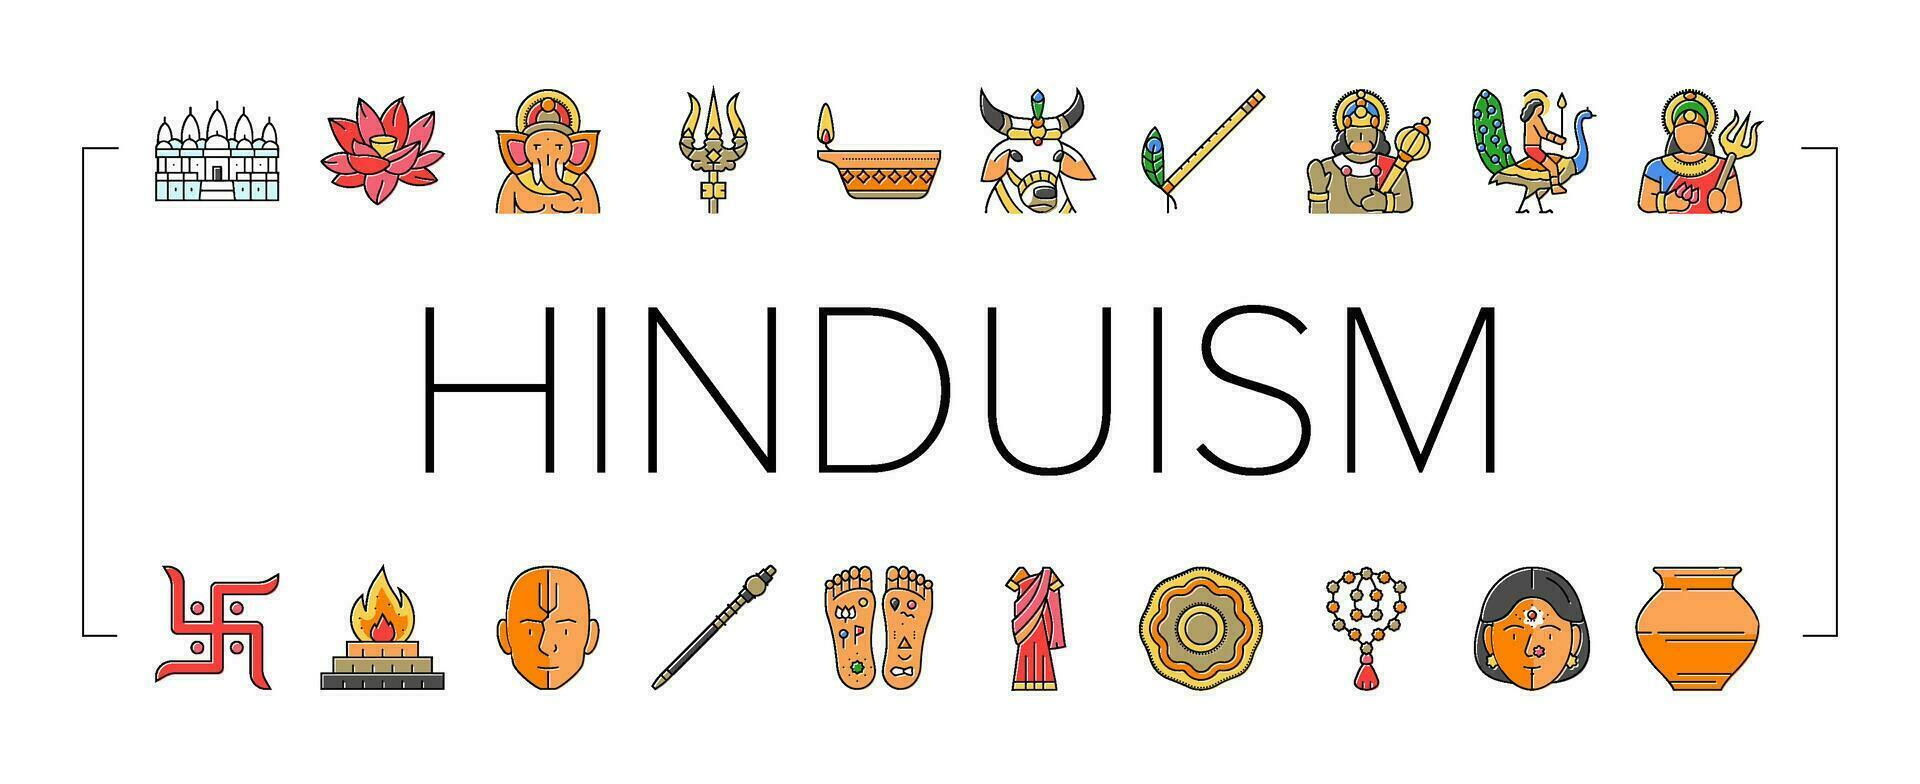 hinduism india hindu god religion icons set vector